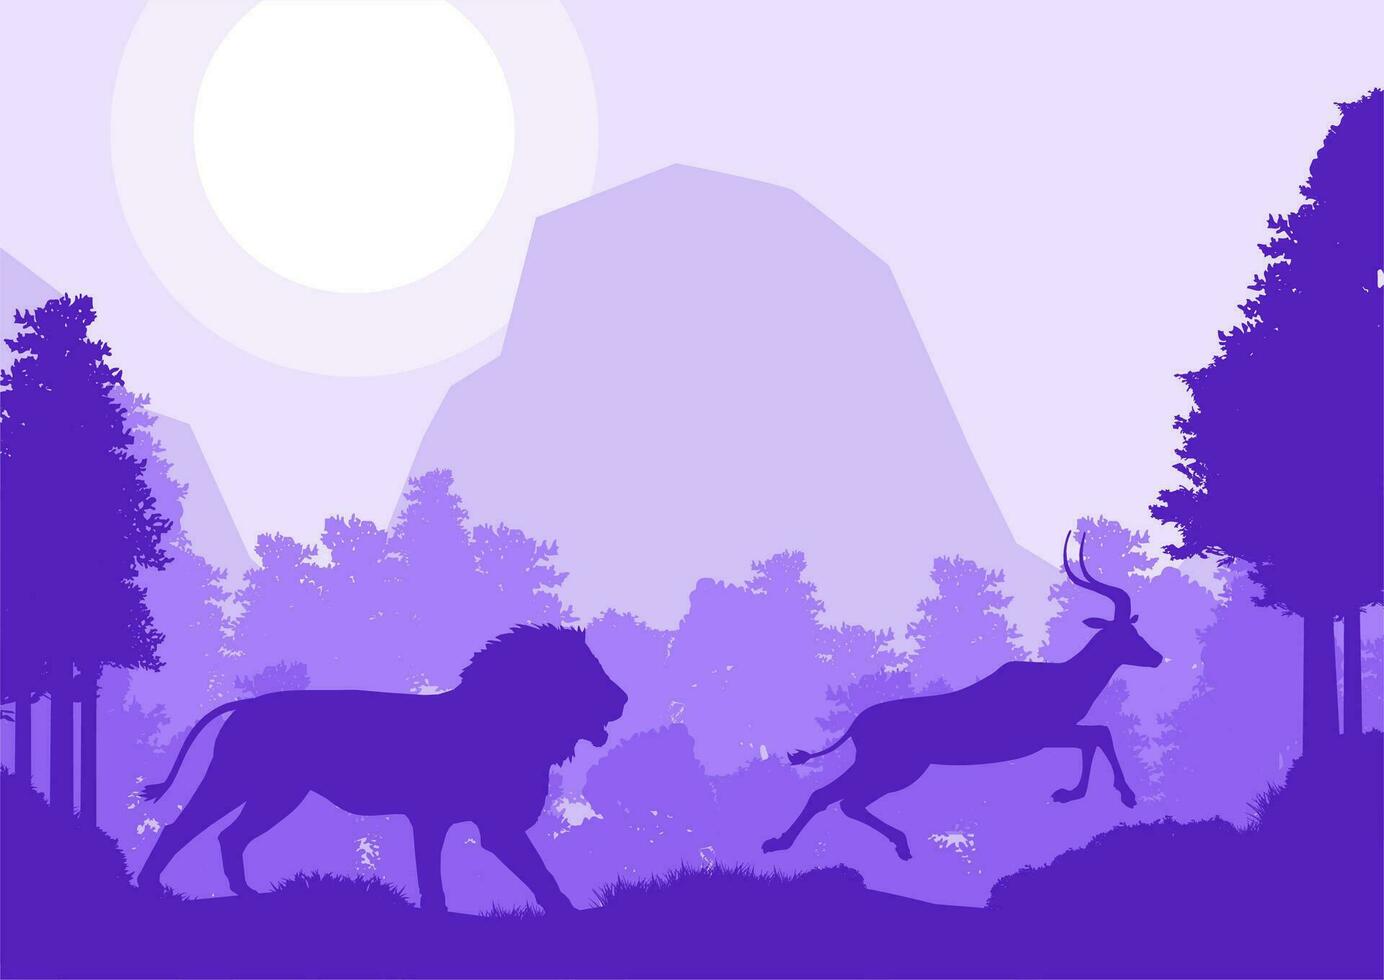 león cazar impala ciervo animal silueta bosque montaña paisaje plano diseño vector ilustración